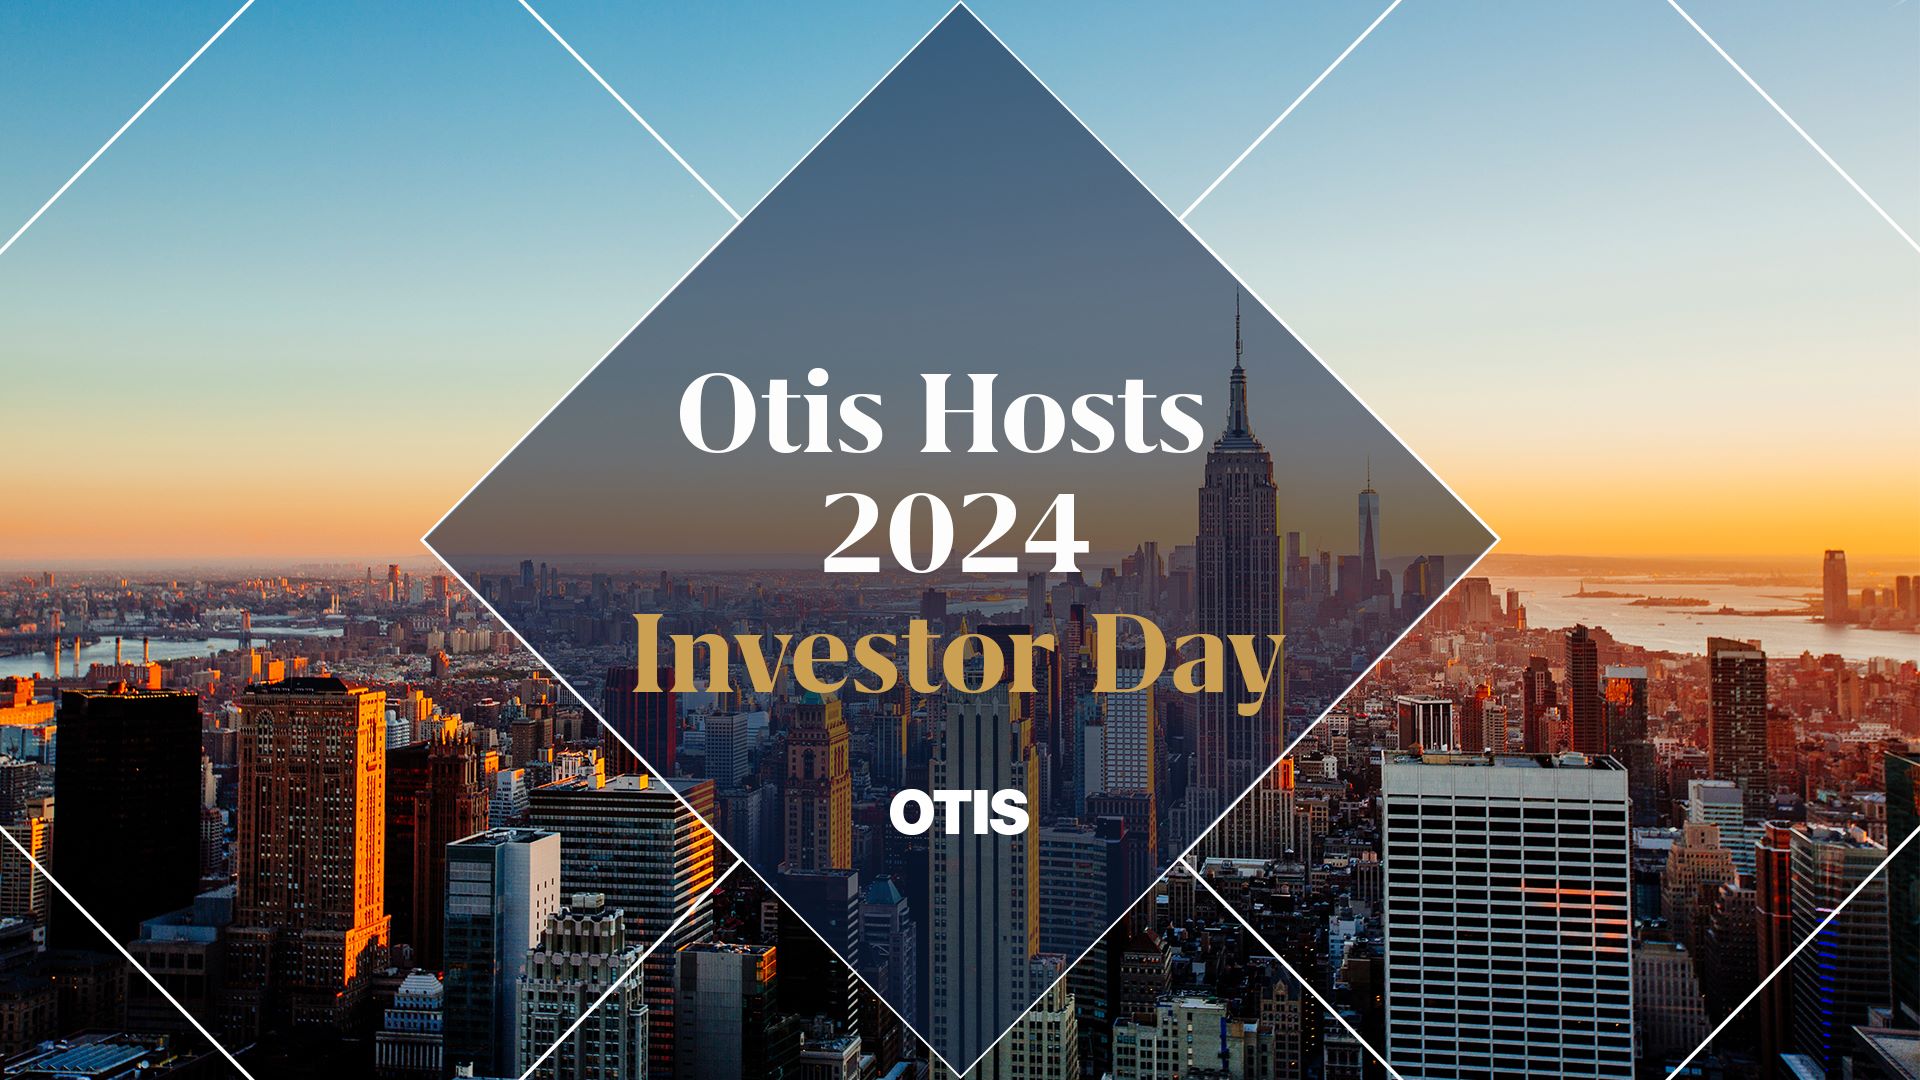 Otis host 2024 investor day overlayed on NYC skyline 